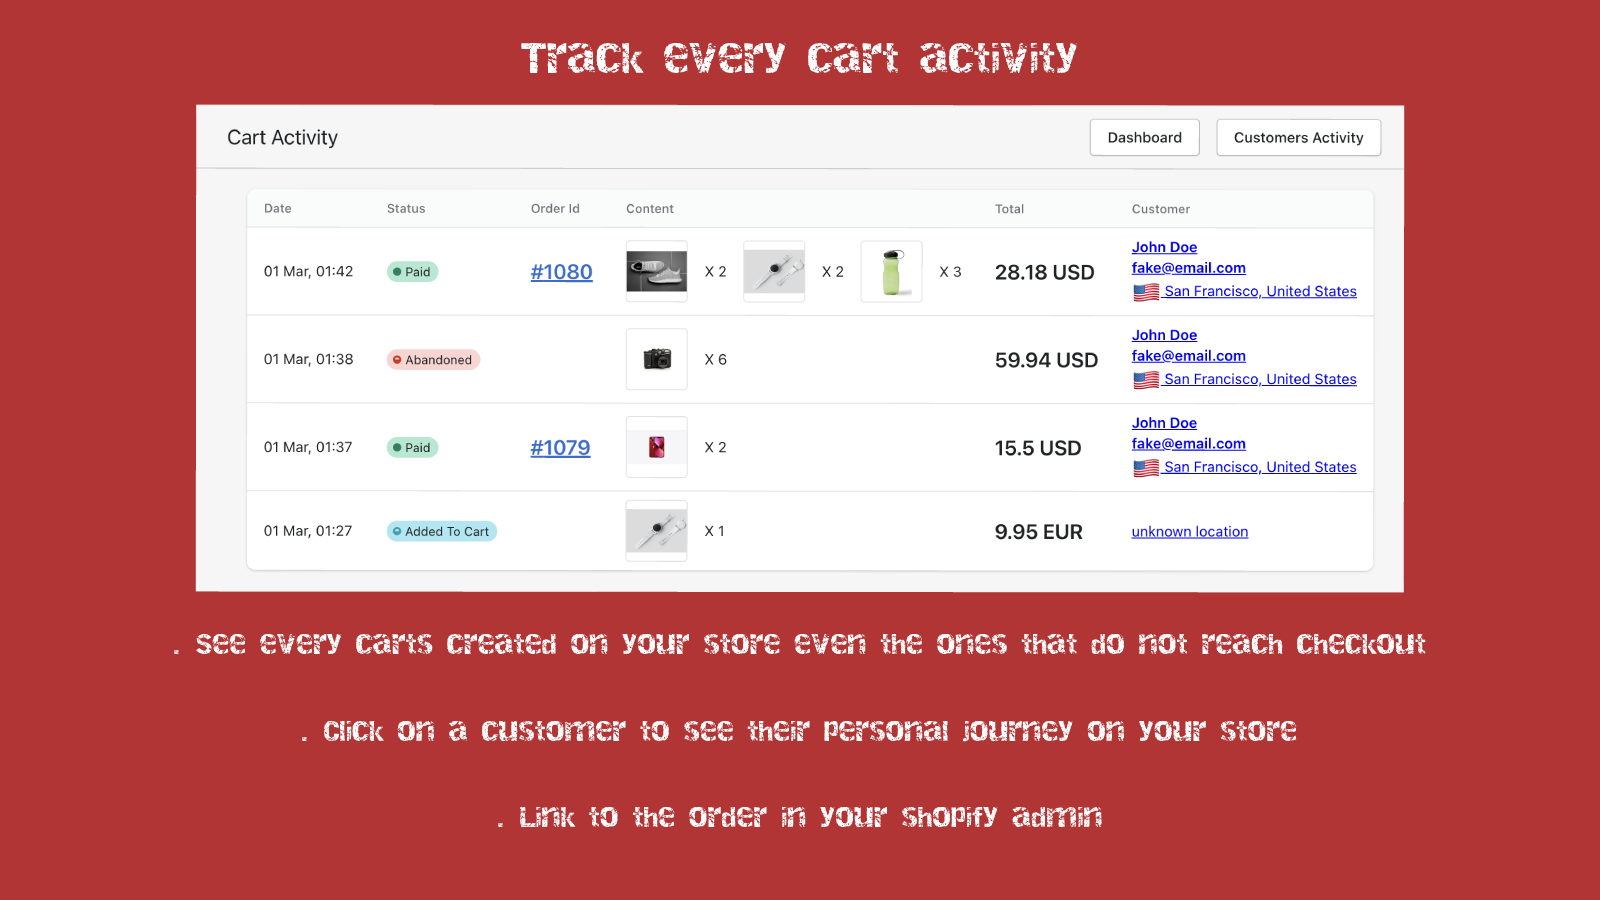 Track every cart activity with Cart-O-Maniak